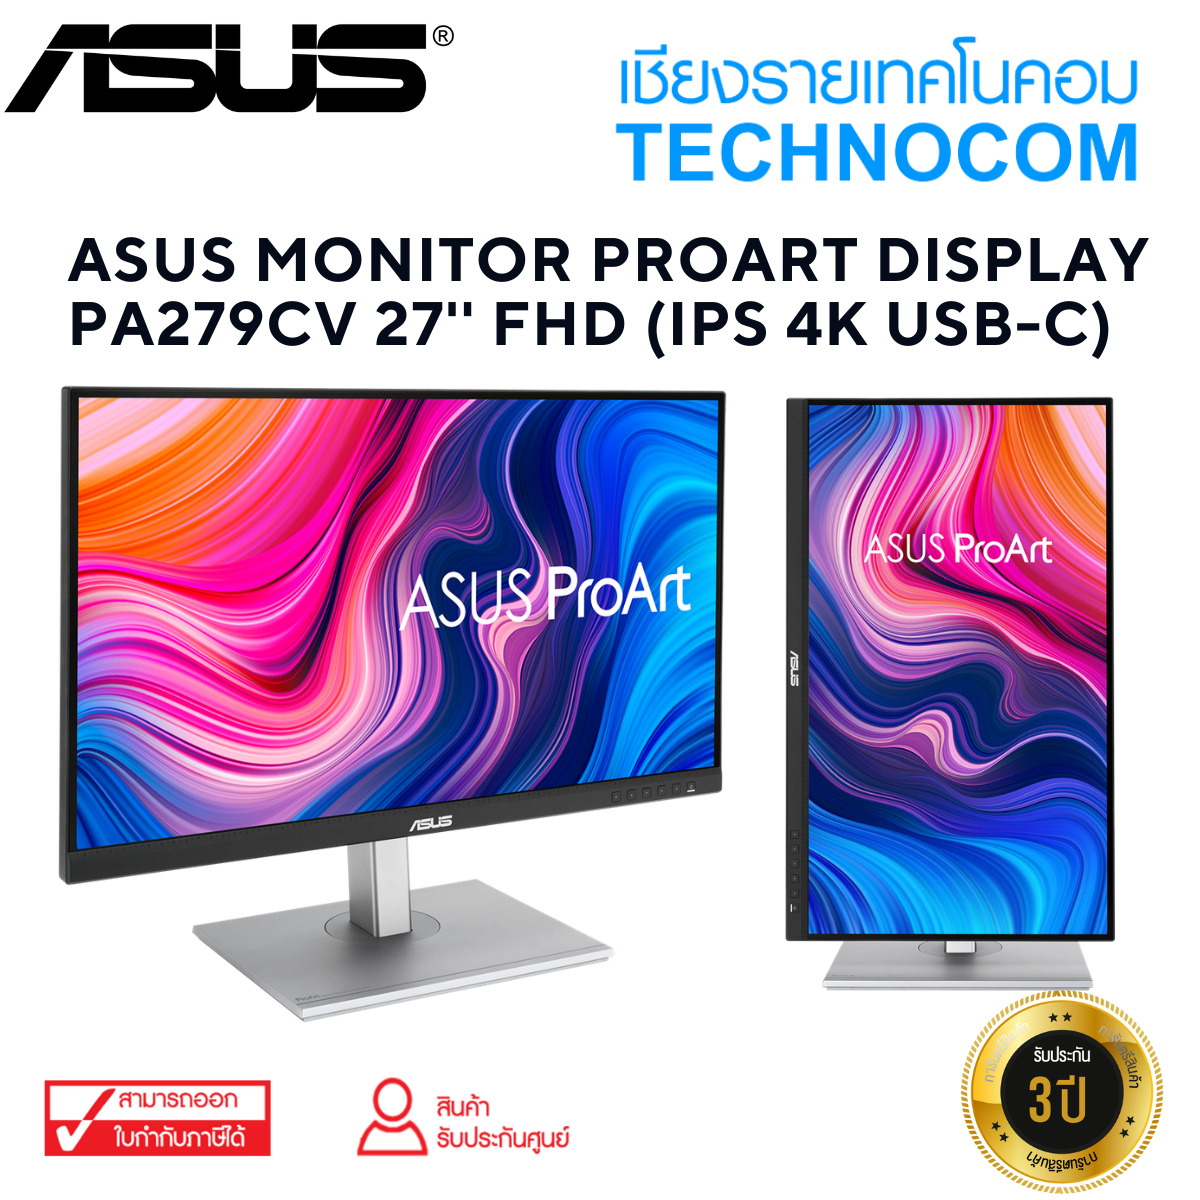 ASUS MONITOR ProArt Display PA279CV 27'' FHD (IPS 4K USB-C)